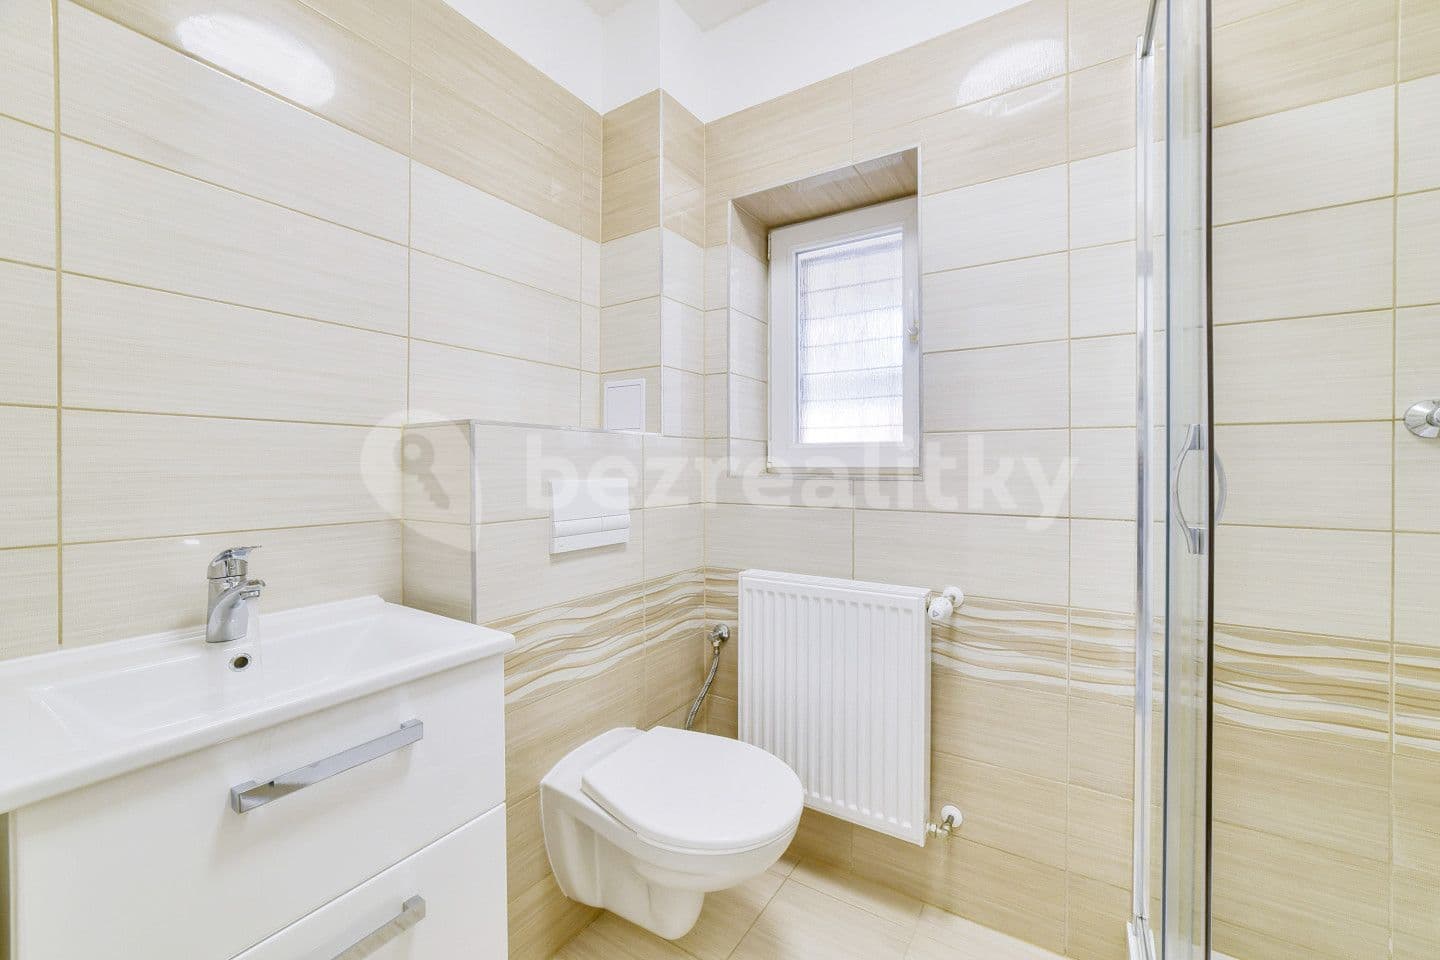 1 bedroom flat for sale, 31 m², Cheb, Karlovarský Region